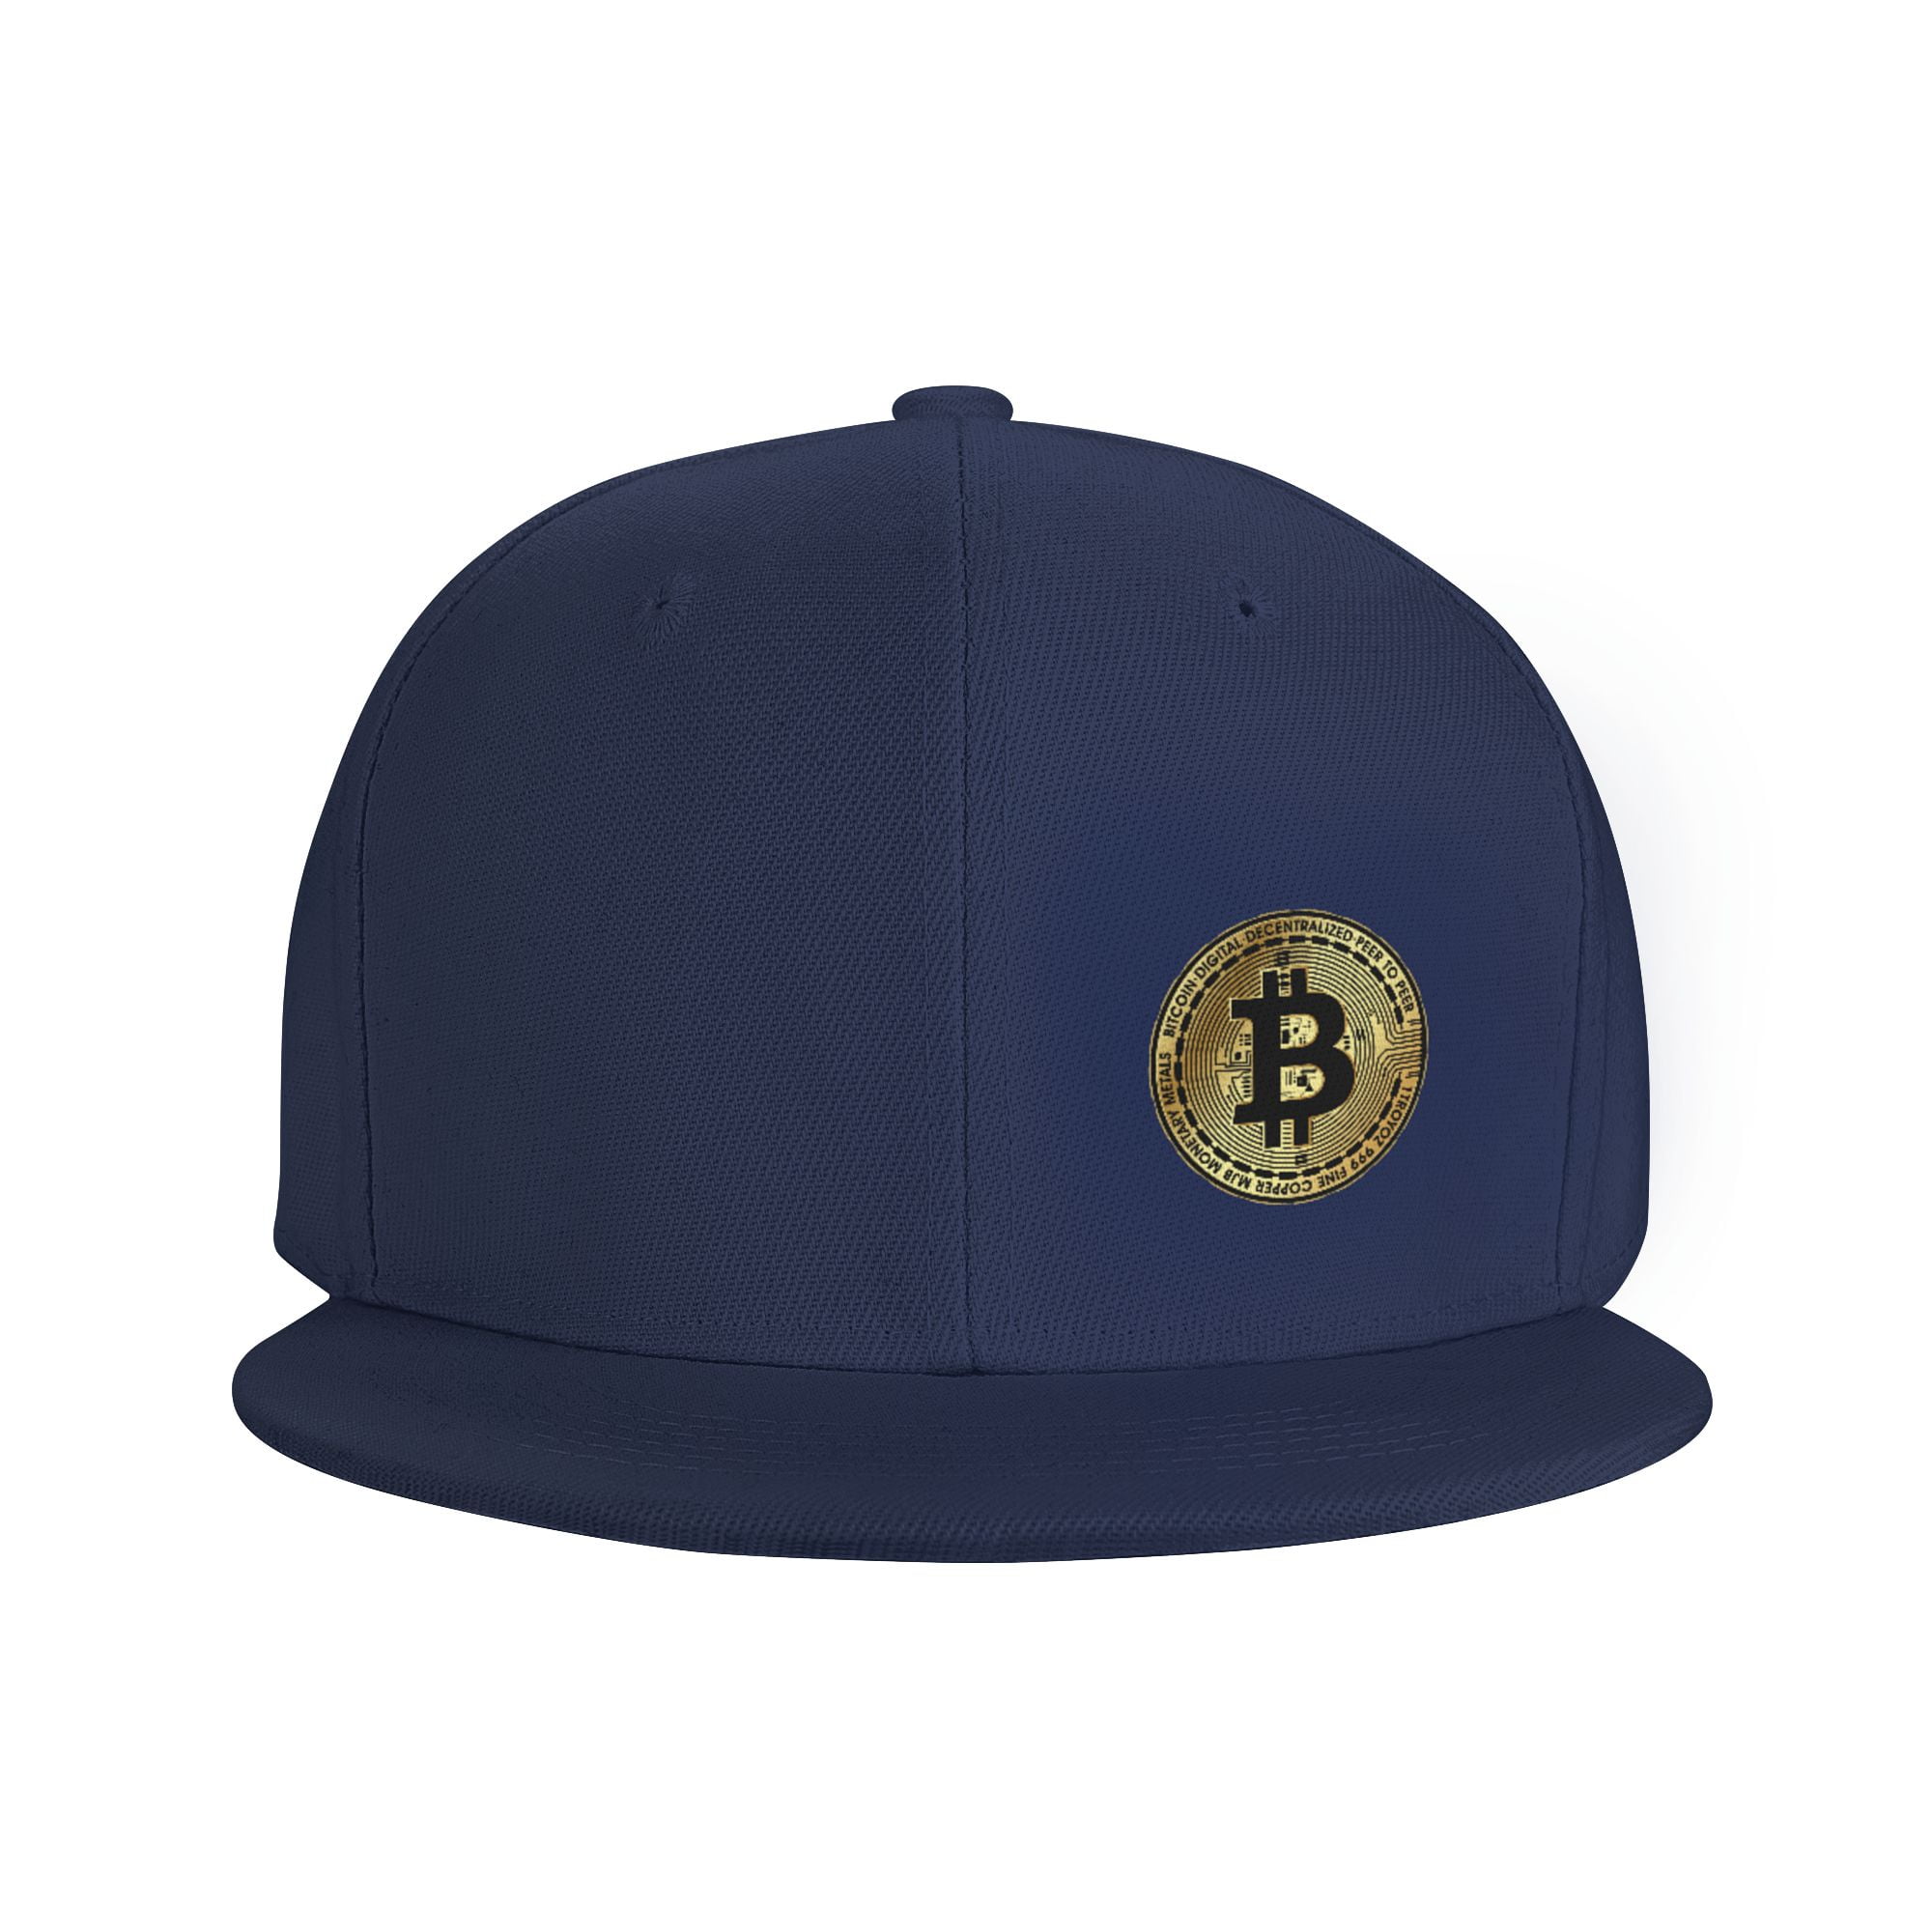 TEQUAN Flat Brim Hat Snapback Hats, Trees Moon Star Sky Cloud Pattern  Adjustable Men Baseball Cap (Blue)